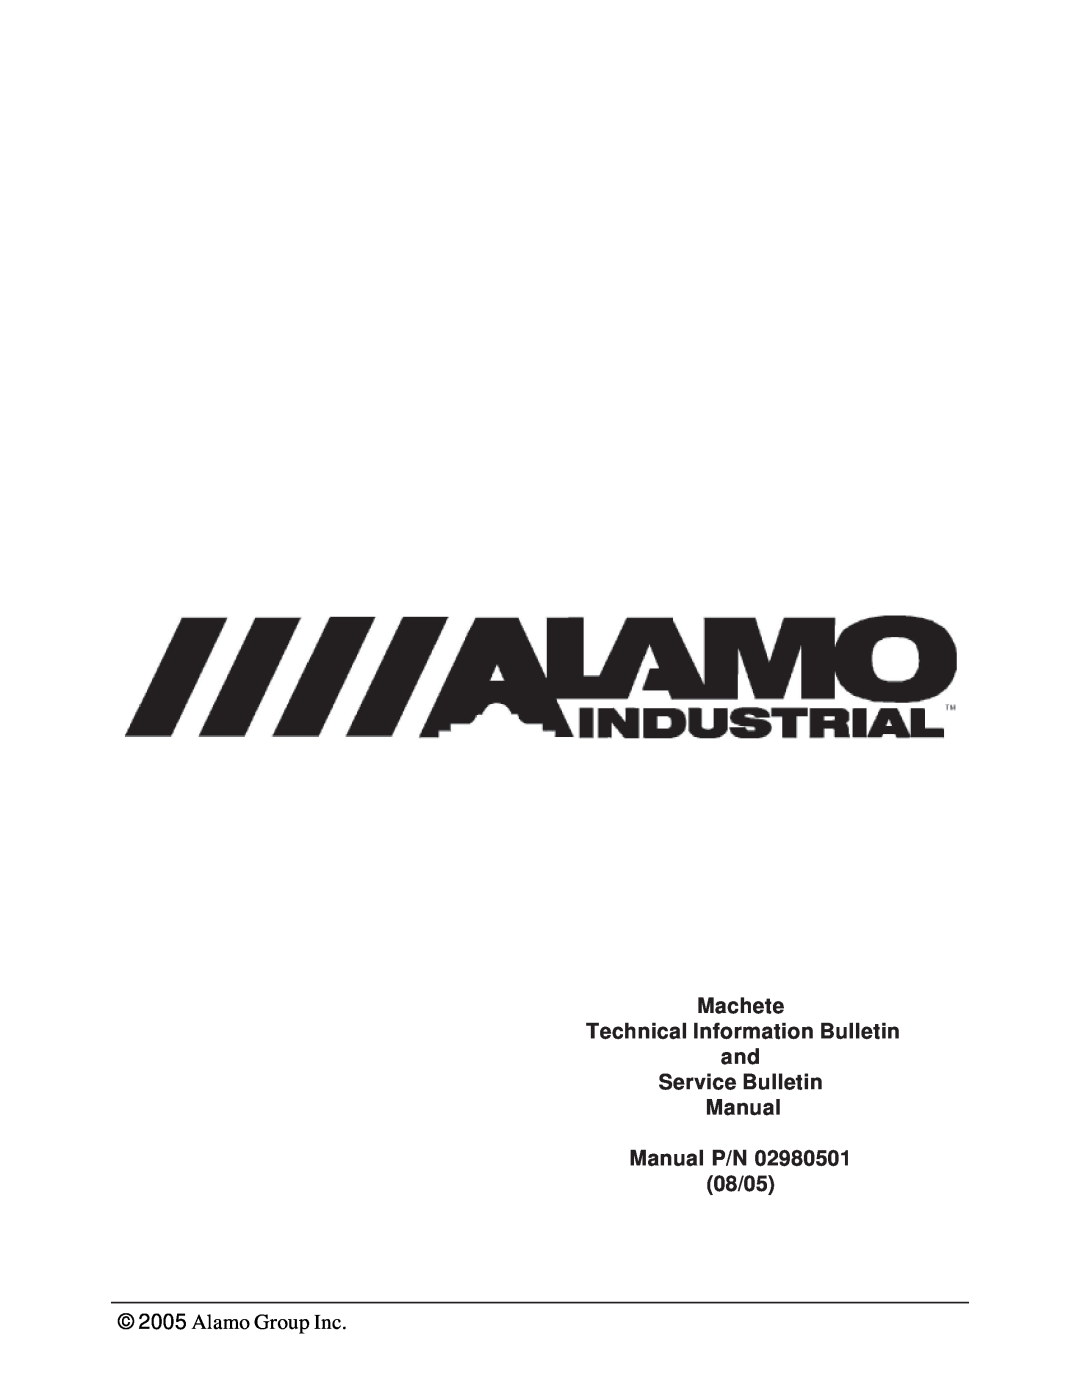 Alamo T 7740 manual Machete Technical Information Bulletin and, Service Bulletin Manual Manual P/N 08/05, Alamo Group Inc 